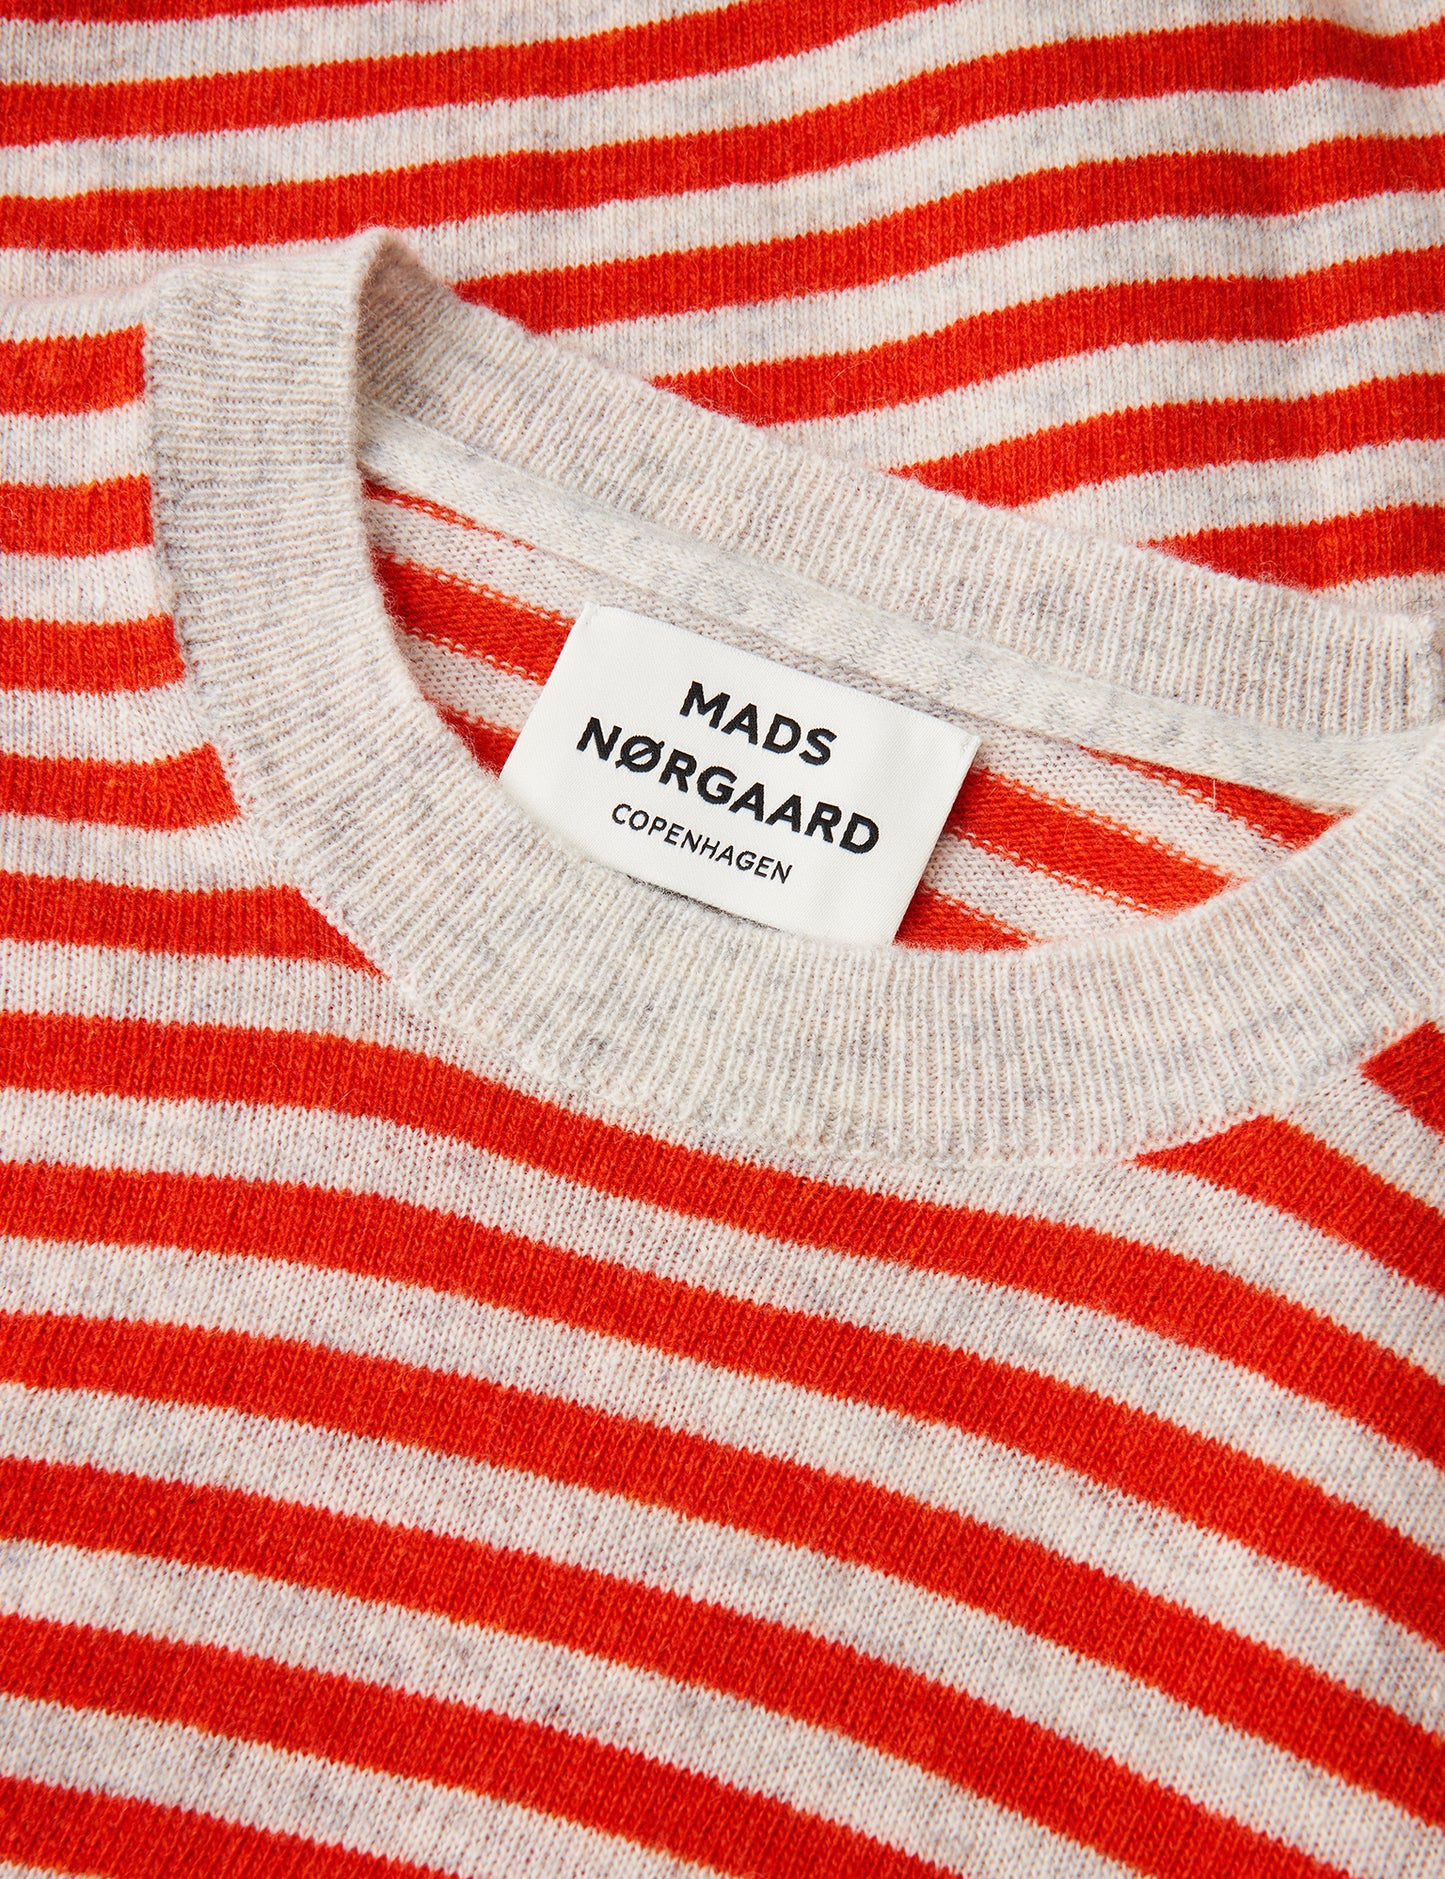 Eco Wool Stripe Kasey Sweater, Puffin's Bill/Bright Grey Mela